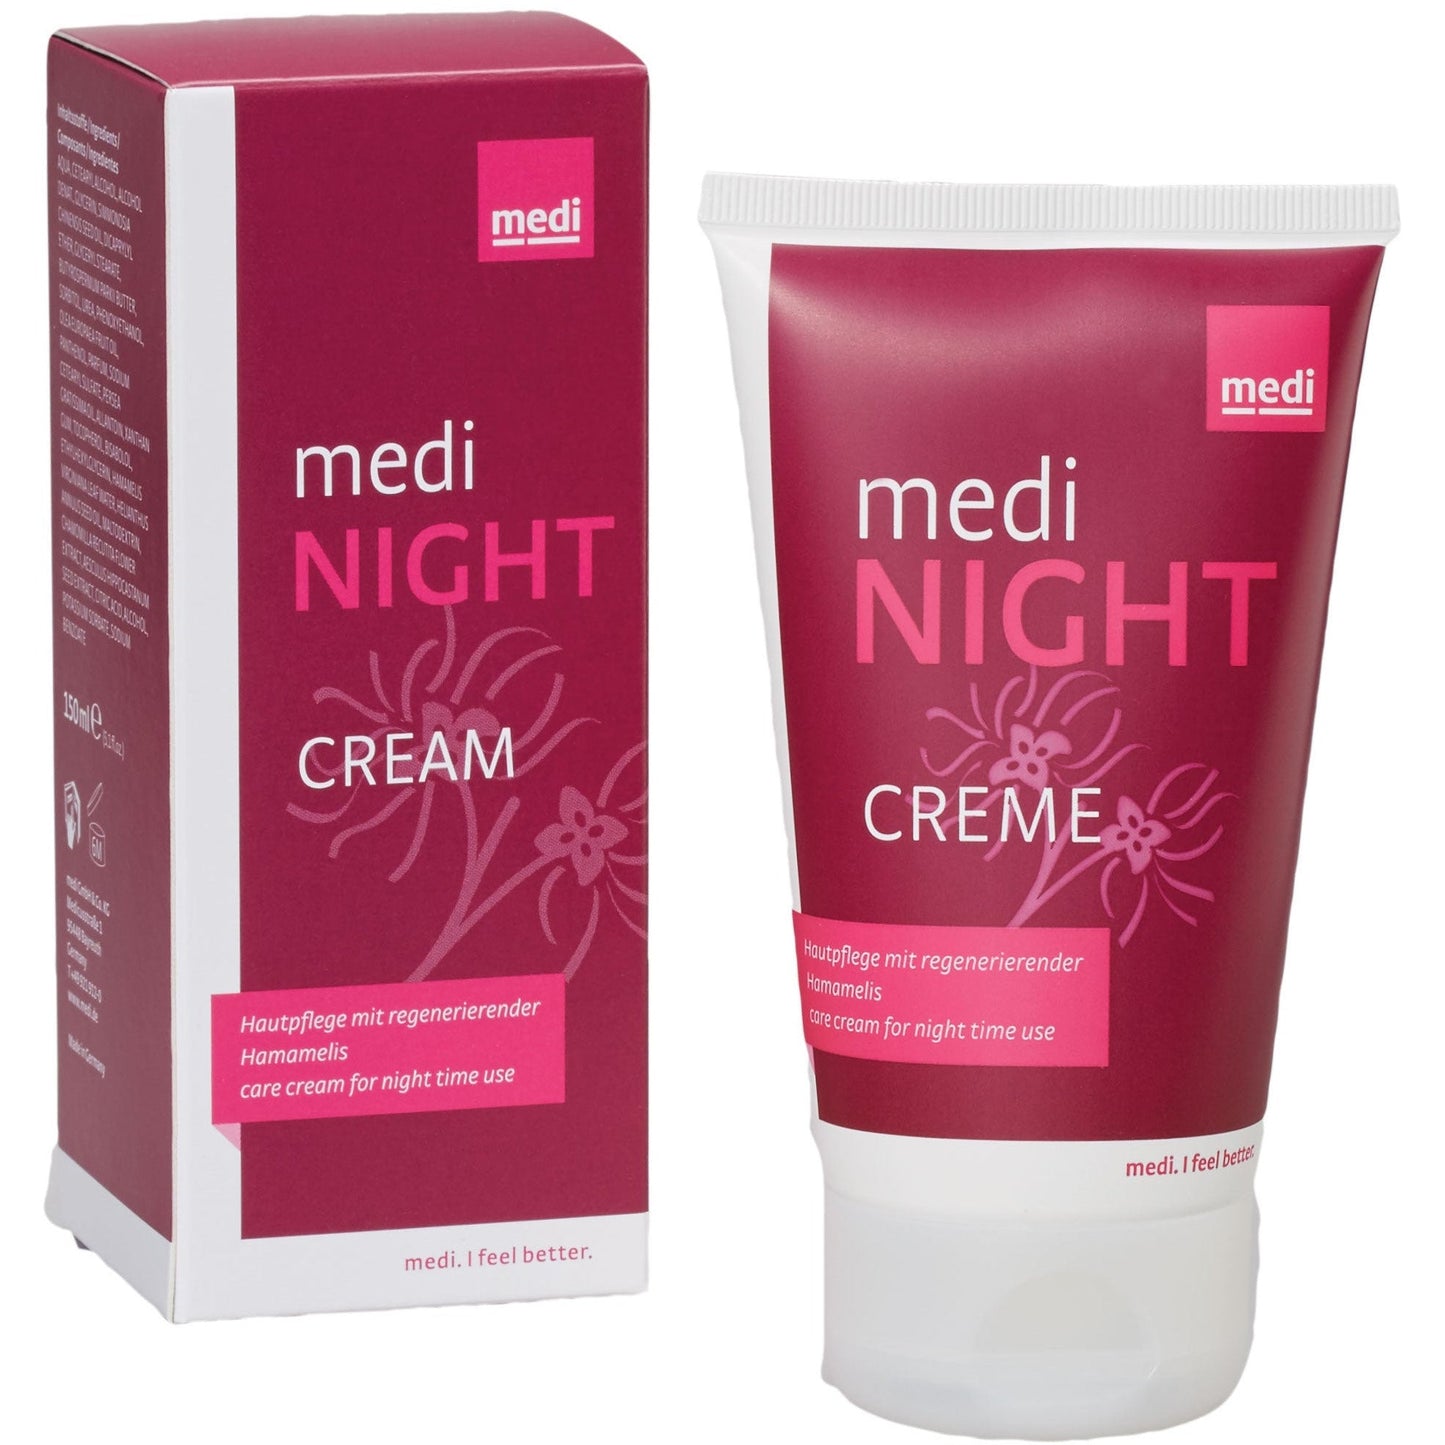 medi night crème